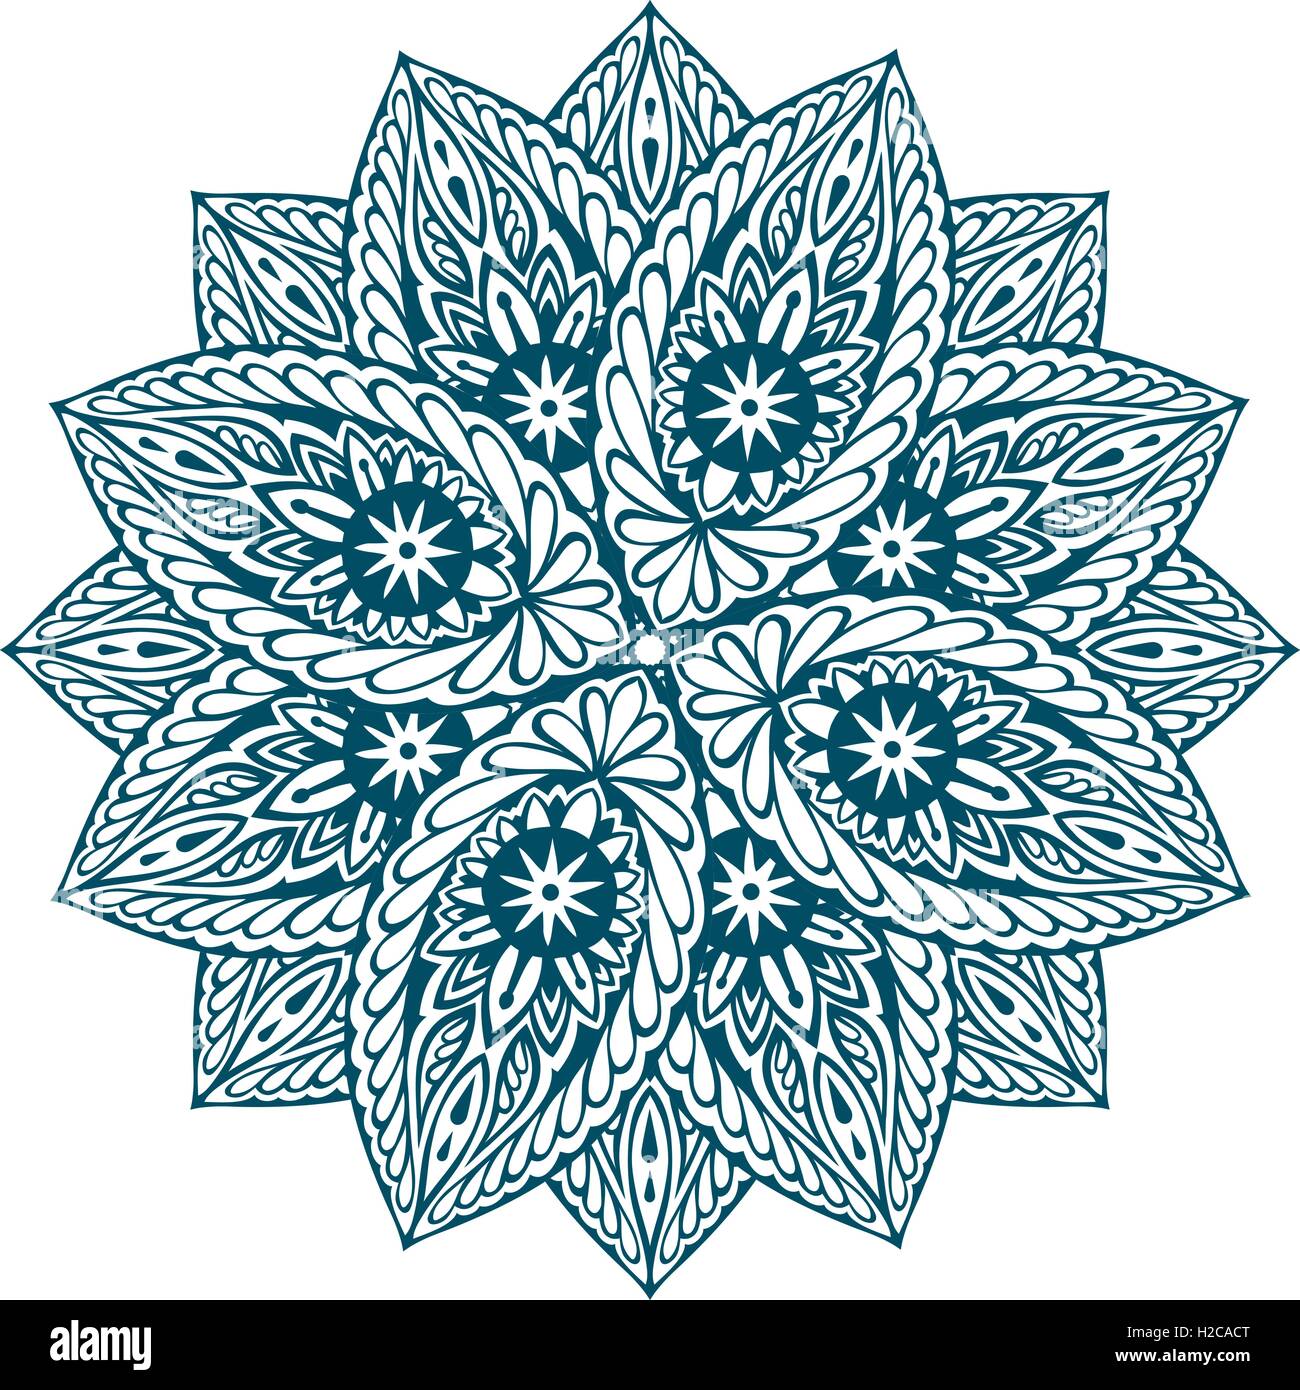 Vektor-schöne Mandala. Dekorative ethnischen floral ornament Stock Vektor